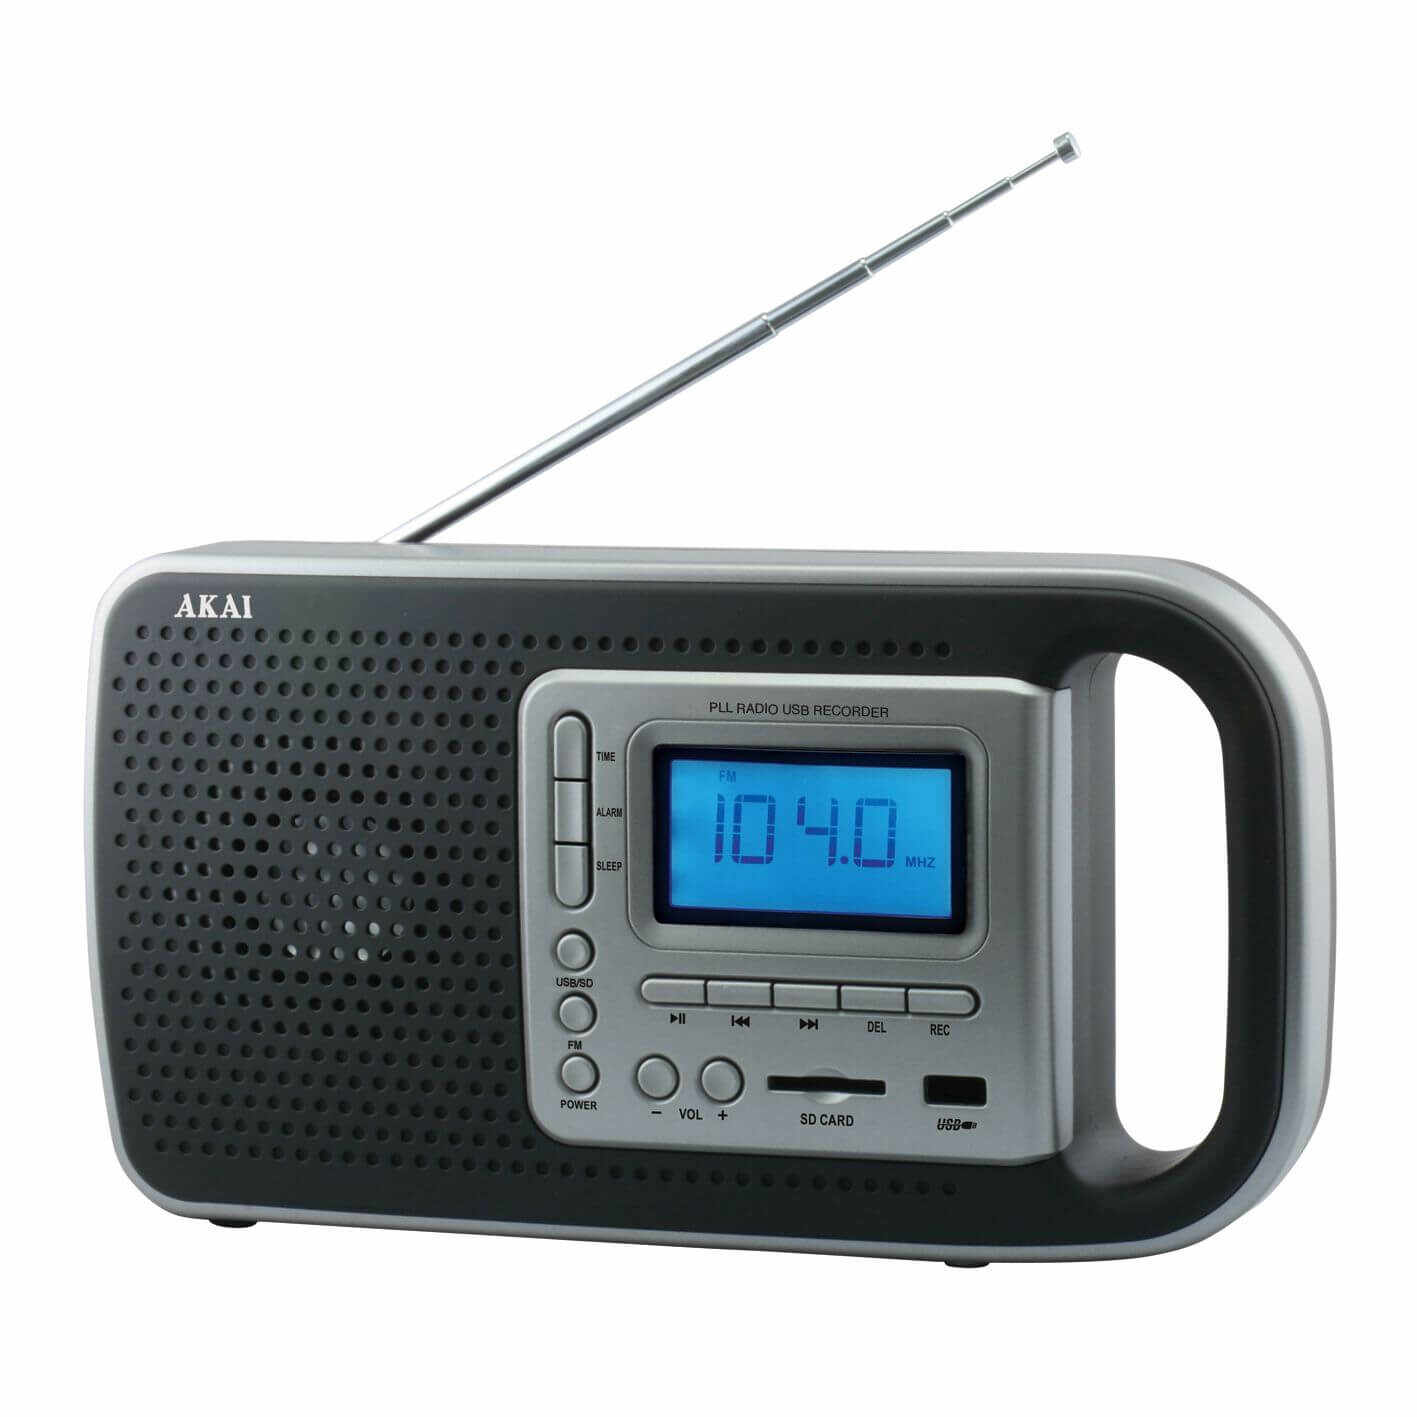 Radio Portabil cu acumulatori AKAI PR005A-420B, USB